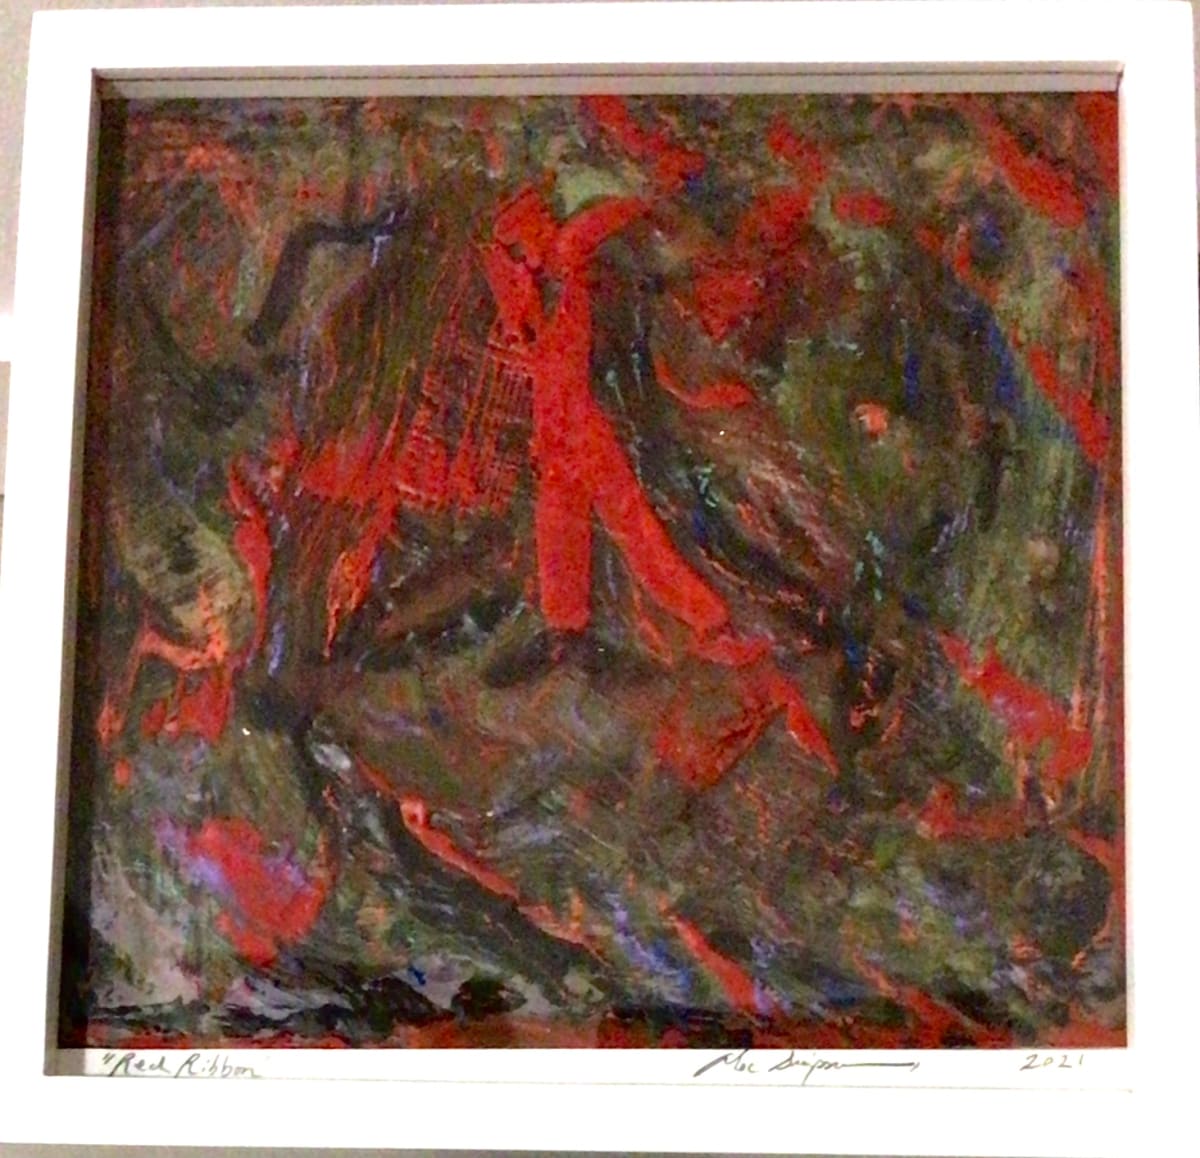 Red Ribbon by Alec Simpson 